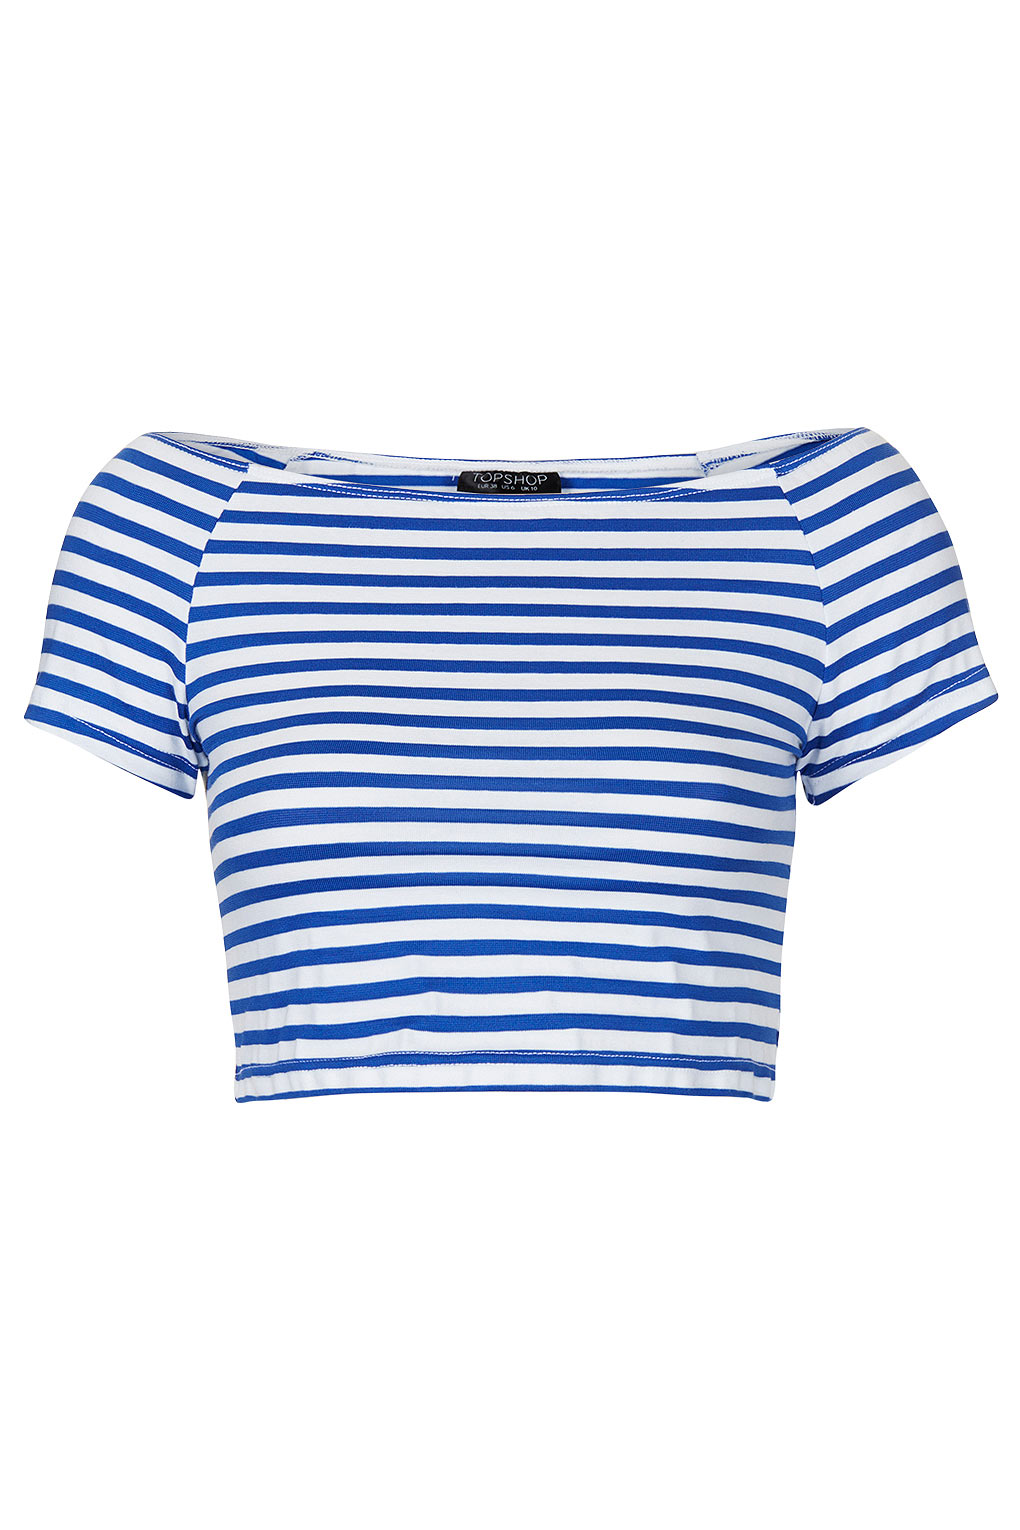 TOPSHOP Stripe Bardot Crop Top in Blue (White) - Lyst